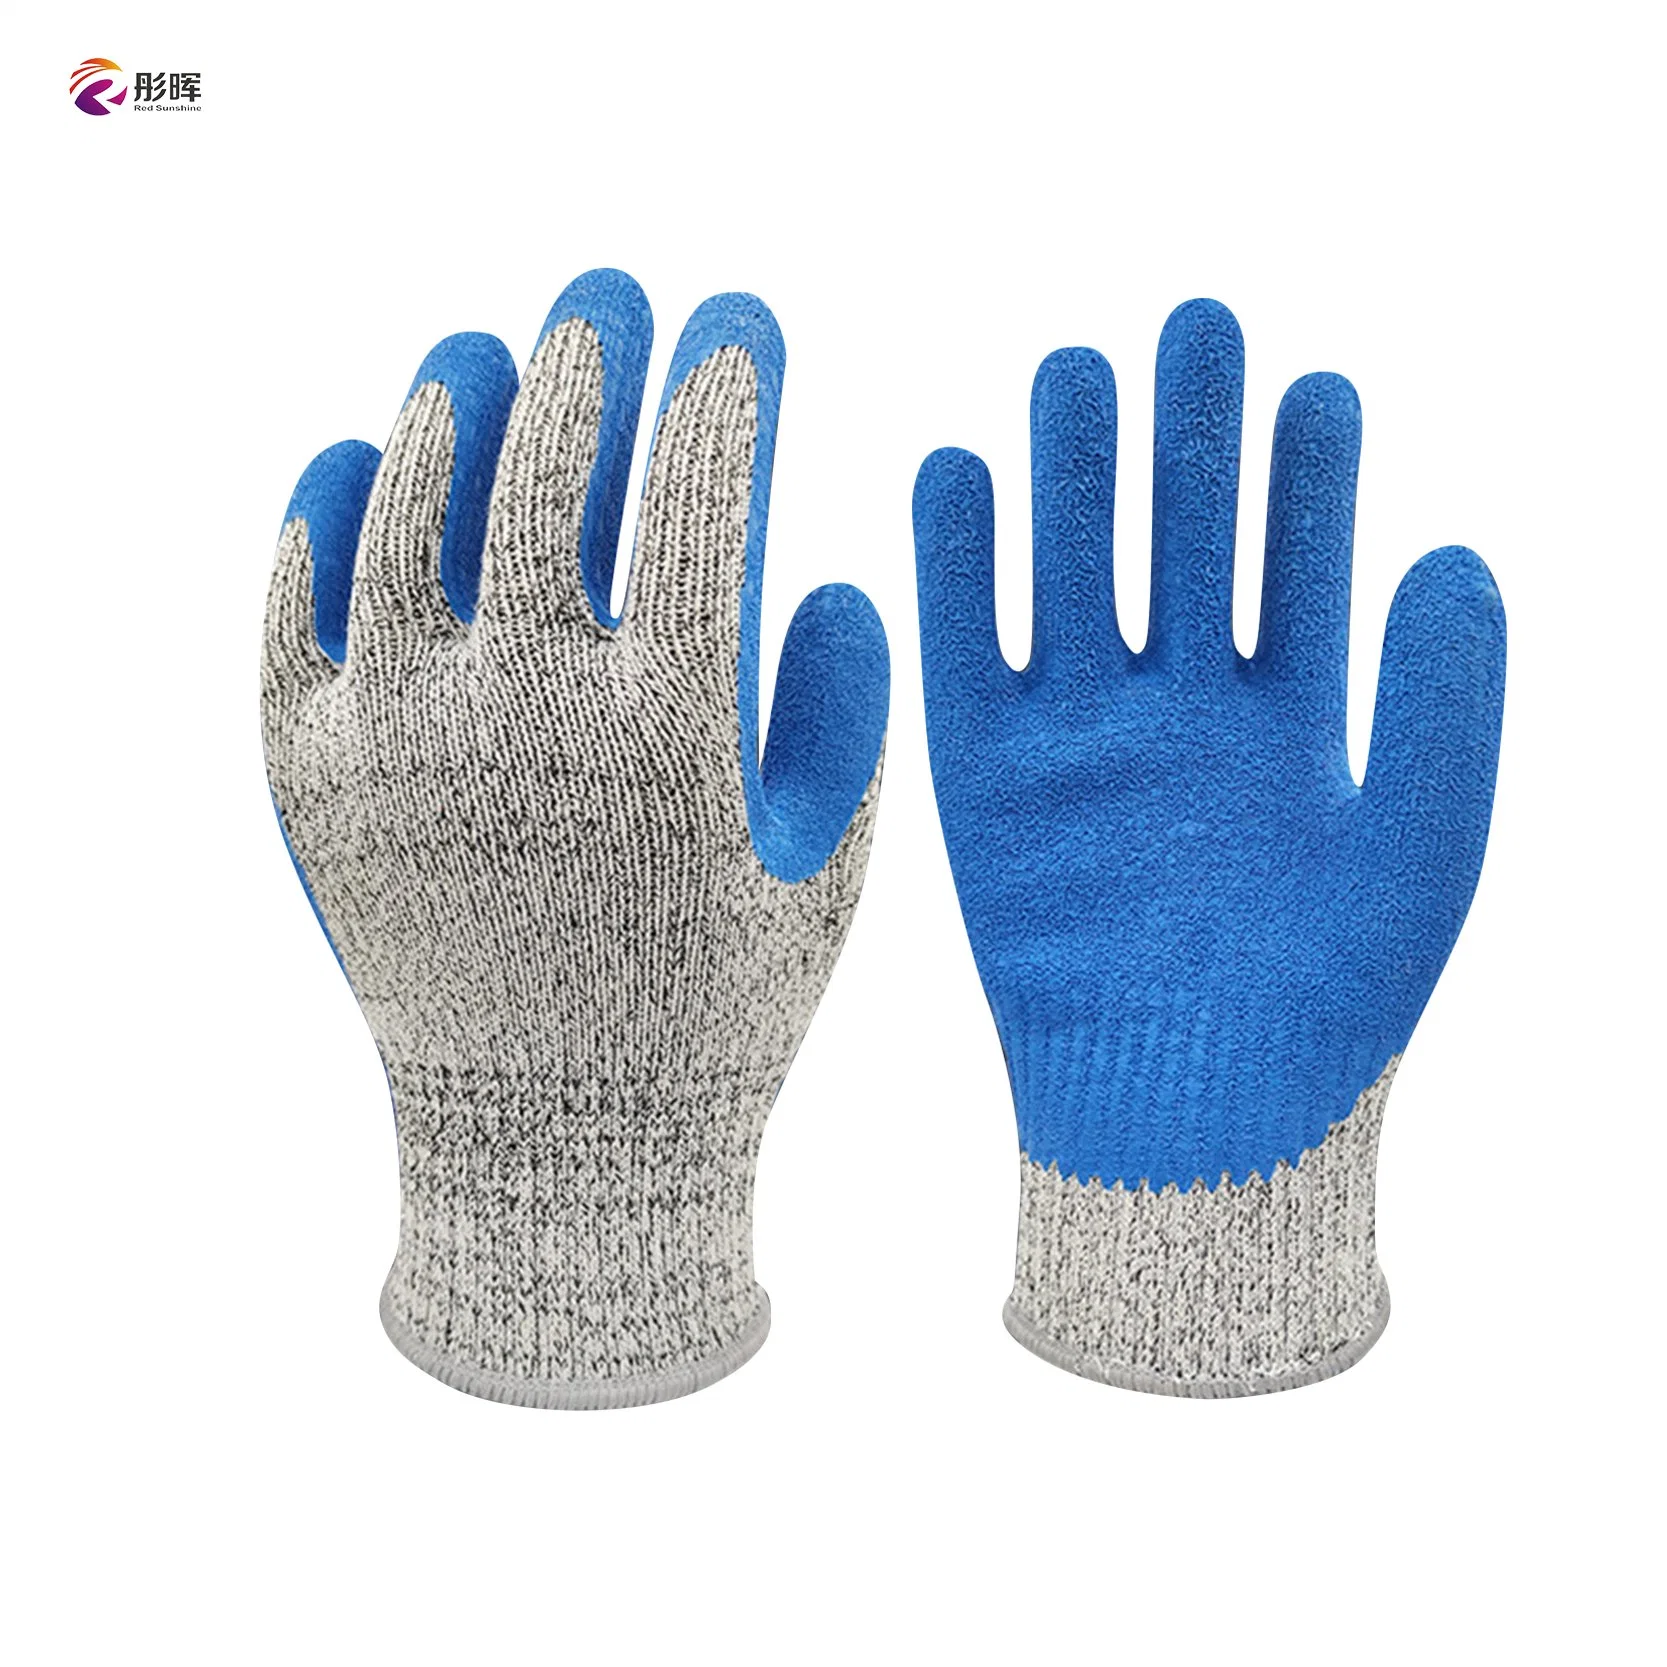 China Großhandel Bauarbeit Polyester Hppe Anti-Cut Handschuhe Grau Nylon Gestrickte Latexhandschuhe Mit Knittermuster